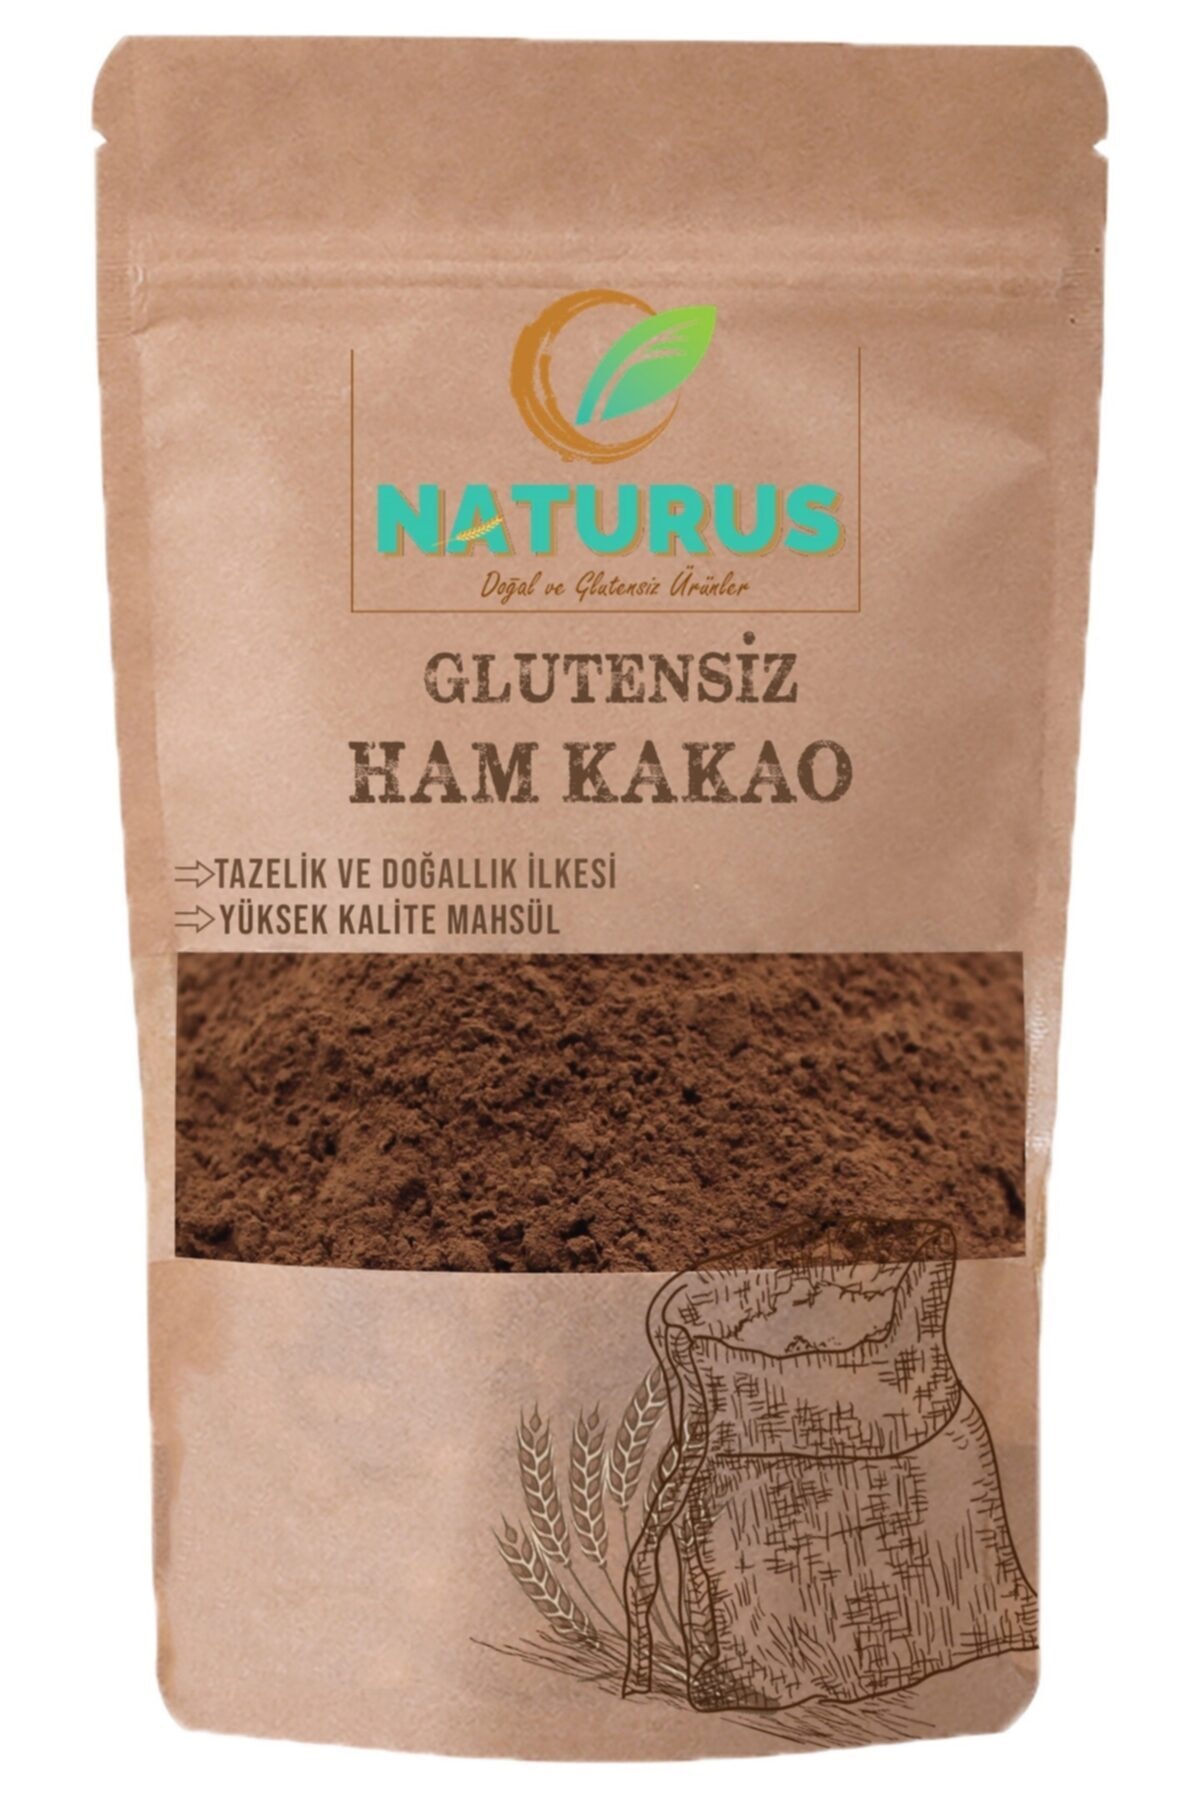 NATURUS 1.kalite Ham Kakao Glutensiz 250 gr